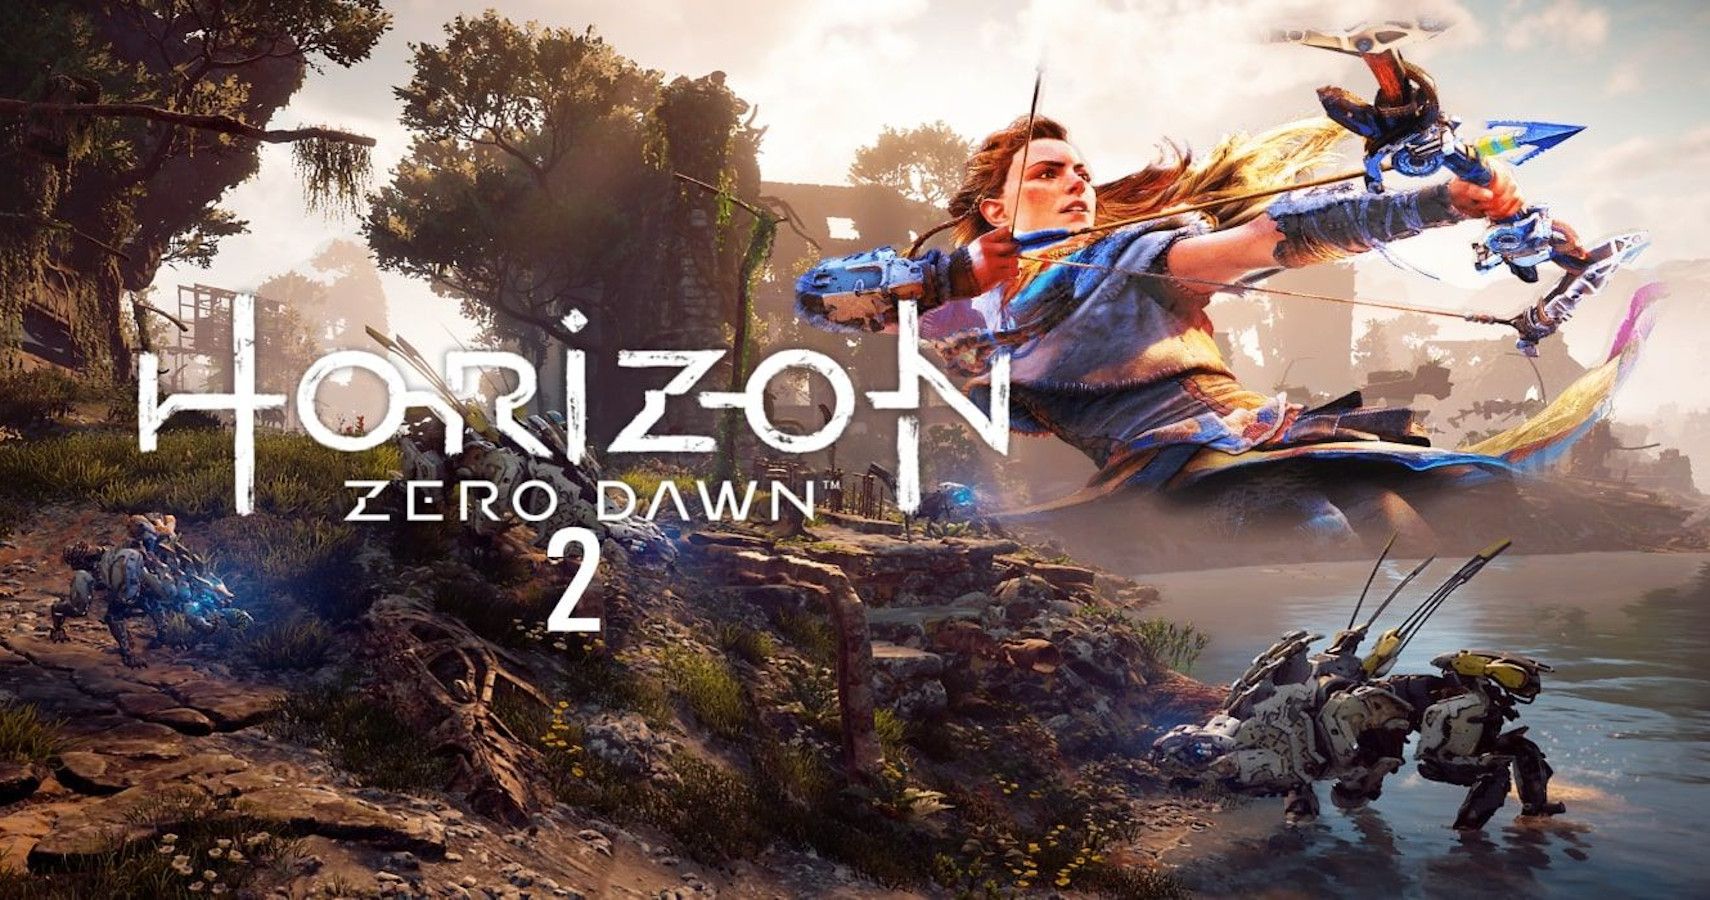 What to Expect in Horizon Zero Dawn 2